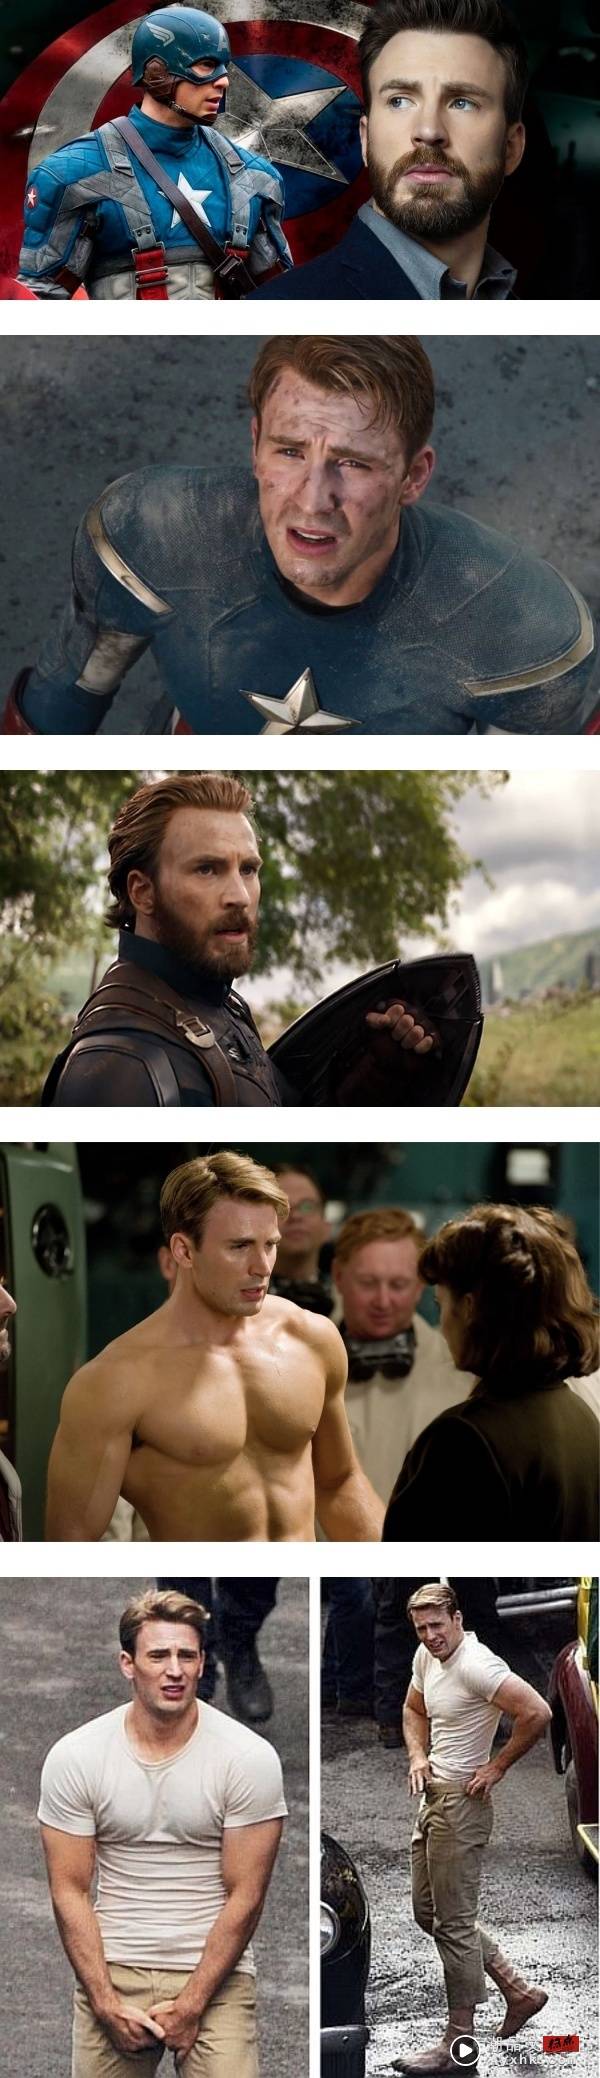 卸下Captain America制服！导演点名Chris Evans演Wolverine 娱乐资讯 图1张